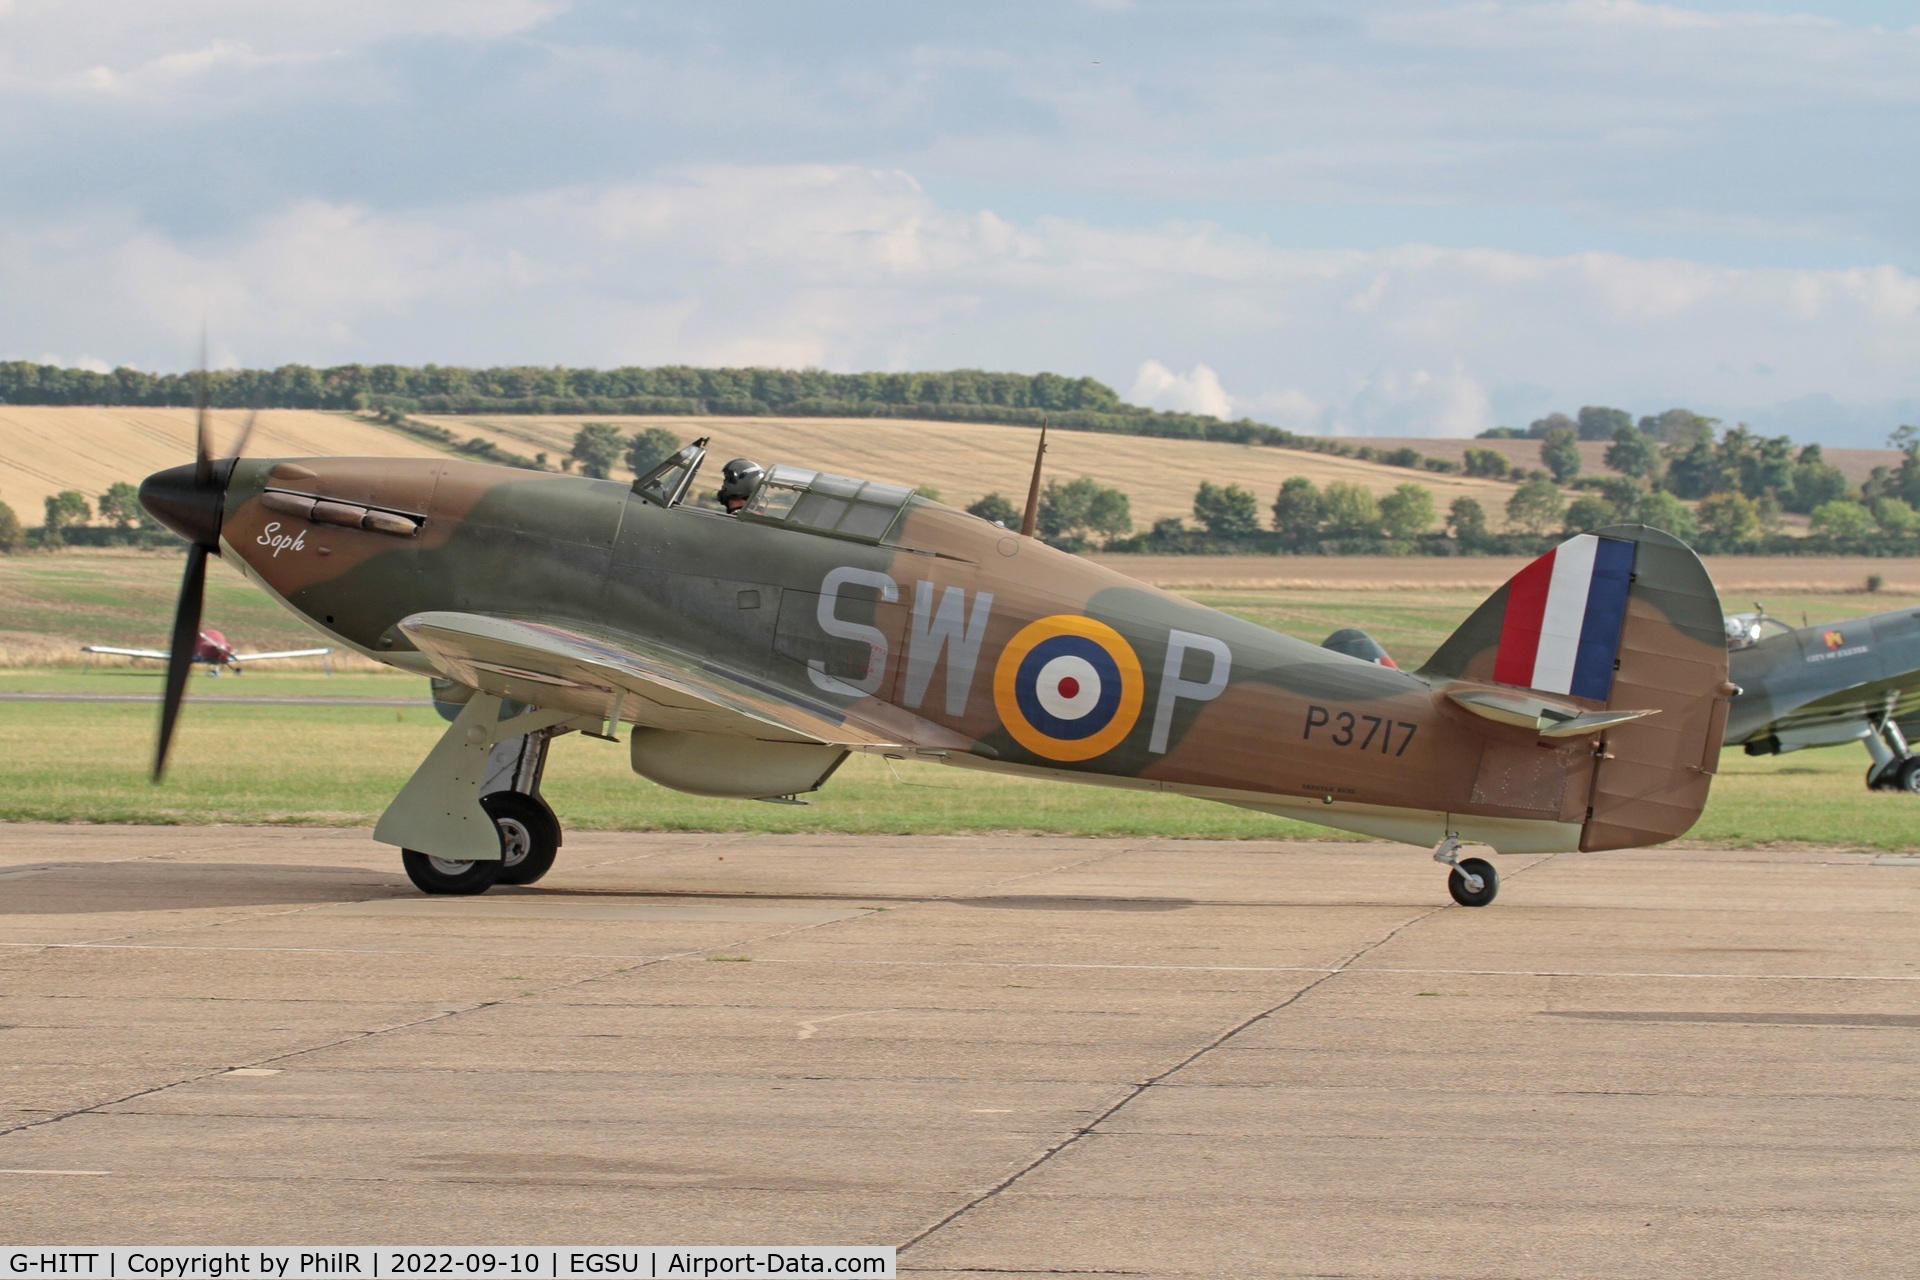 G-HITT, 1940 Hawker Hurricane I C/N Not found / see comment, P3717 (G-HITT) 1940 Hawker Hurricane l BoB Display Duxford